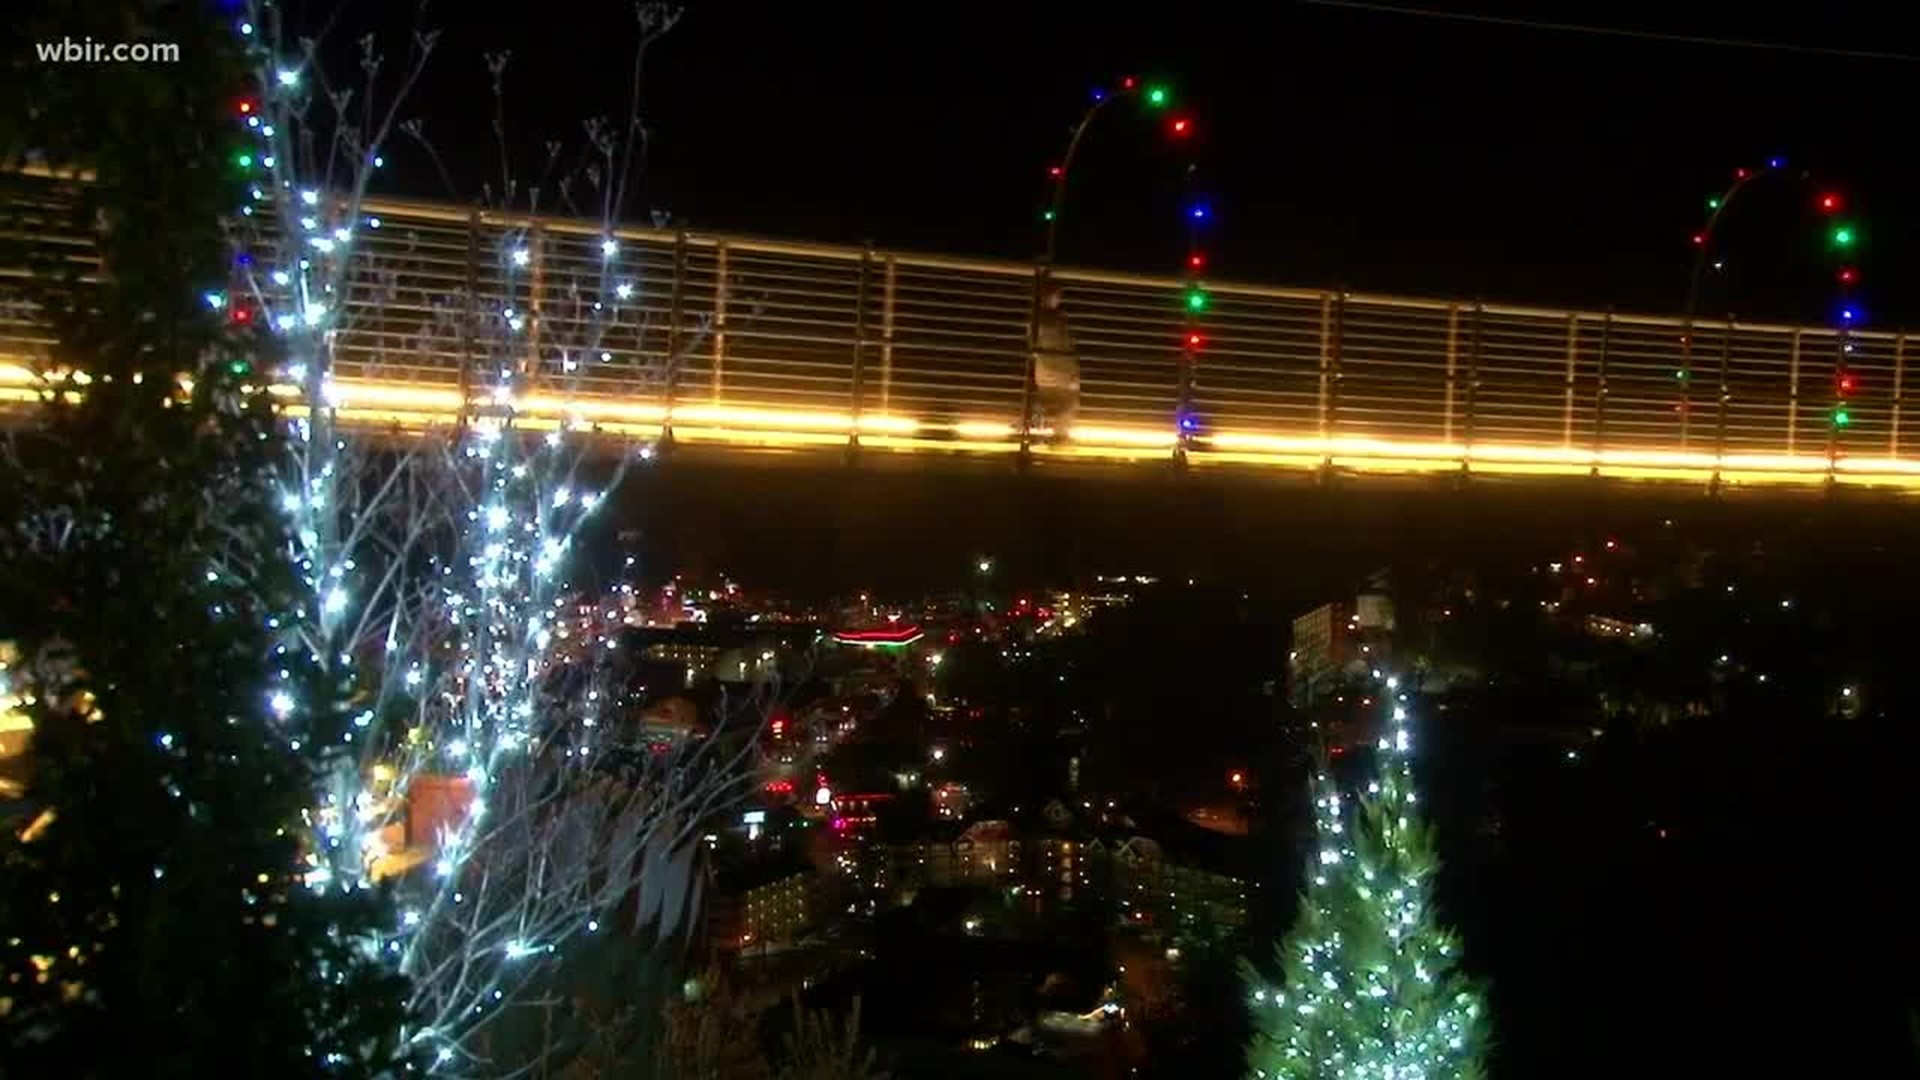 Check out the SkyBridge in Gatlinburg all lit up for Christmas! - Courtesy WBIR